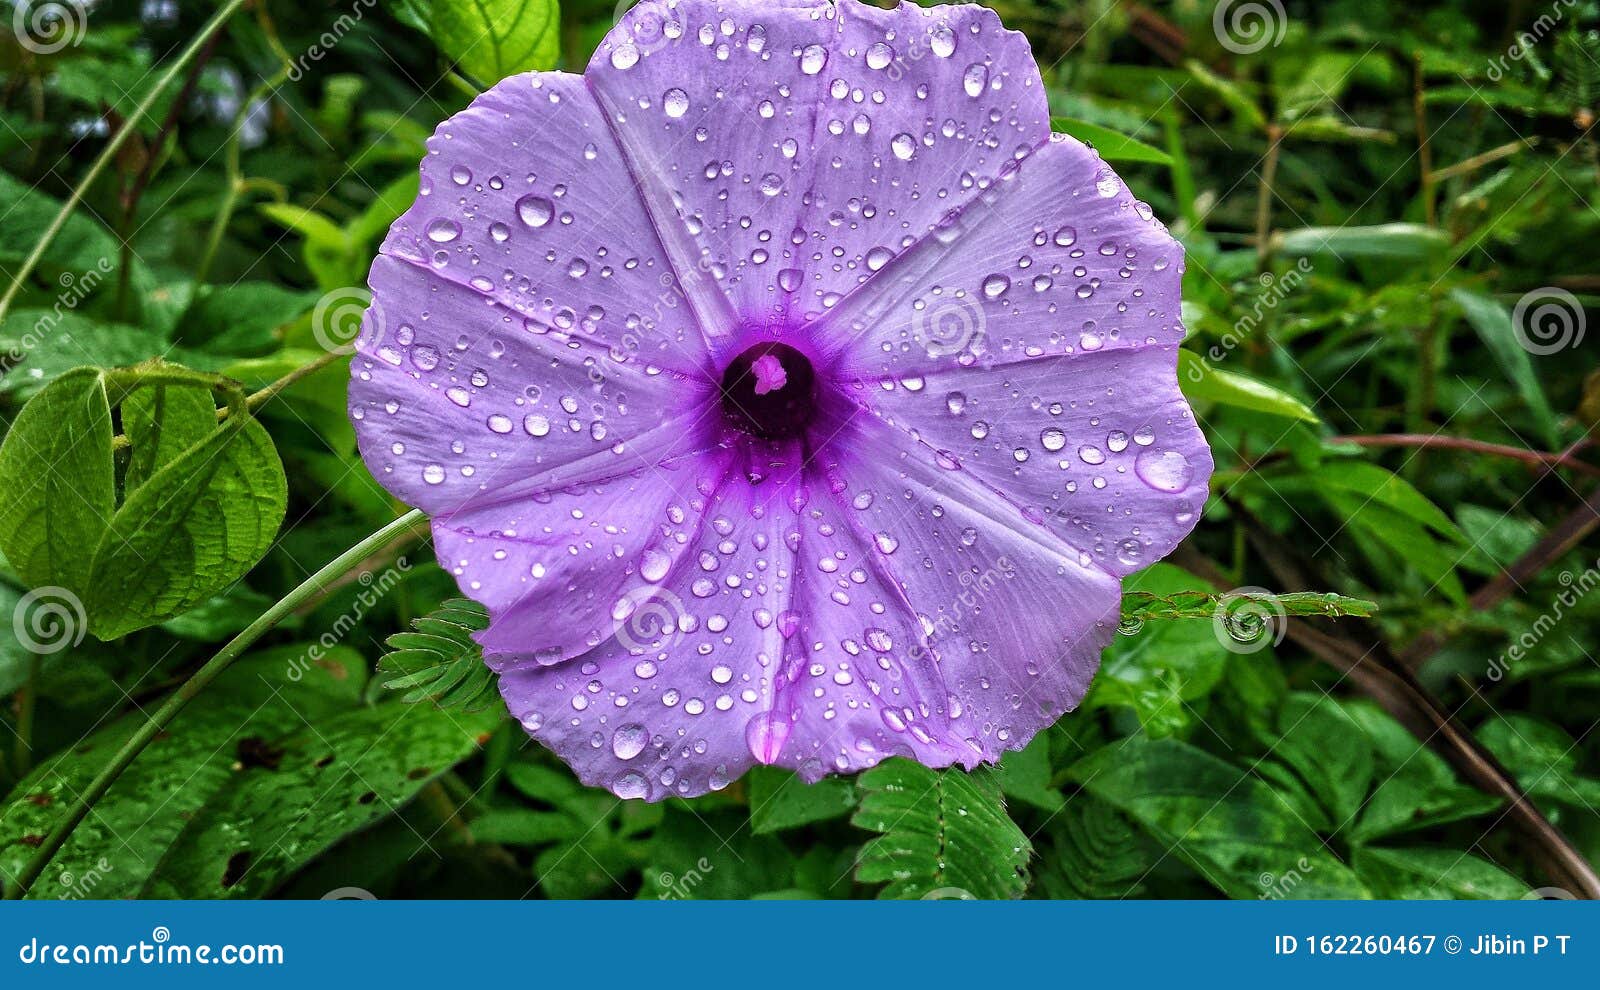 Morning dew flower stock image. Image of drop, morning - 162260467